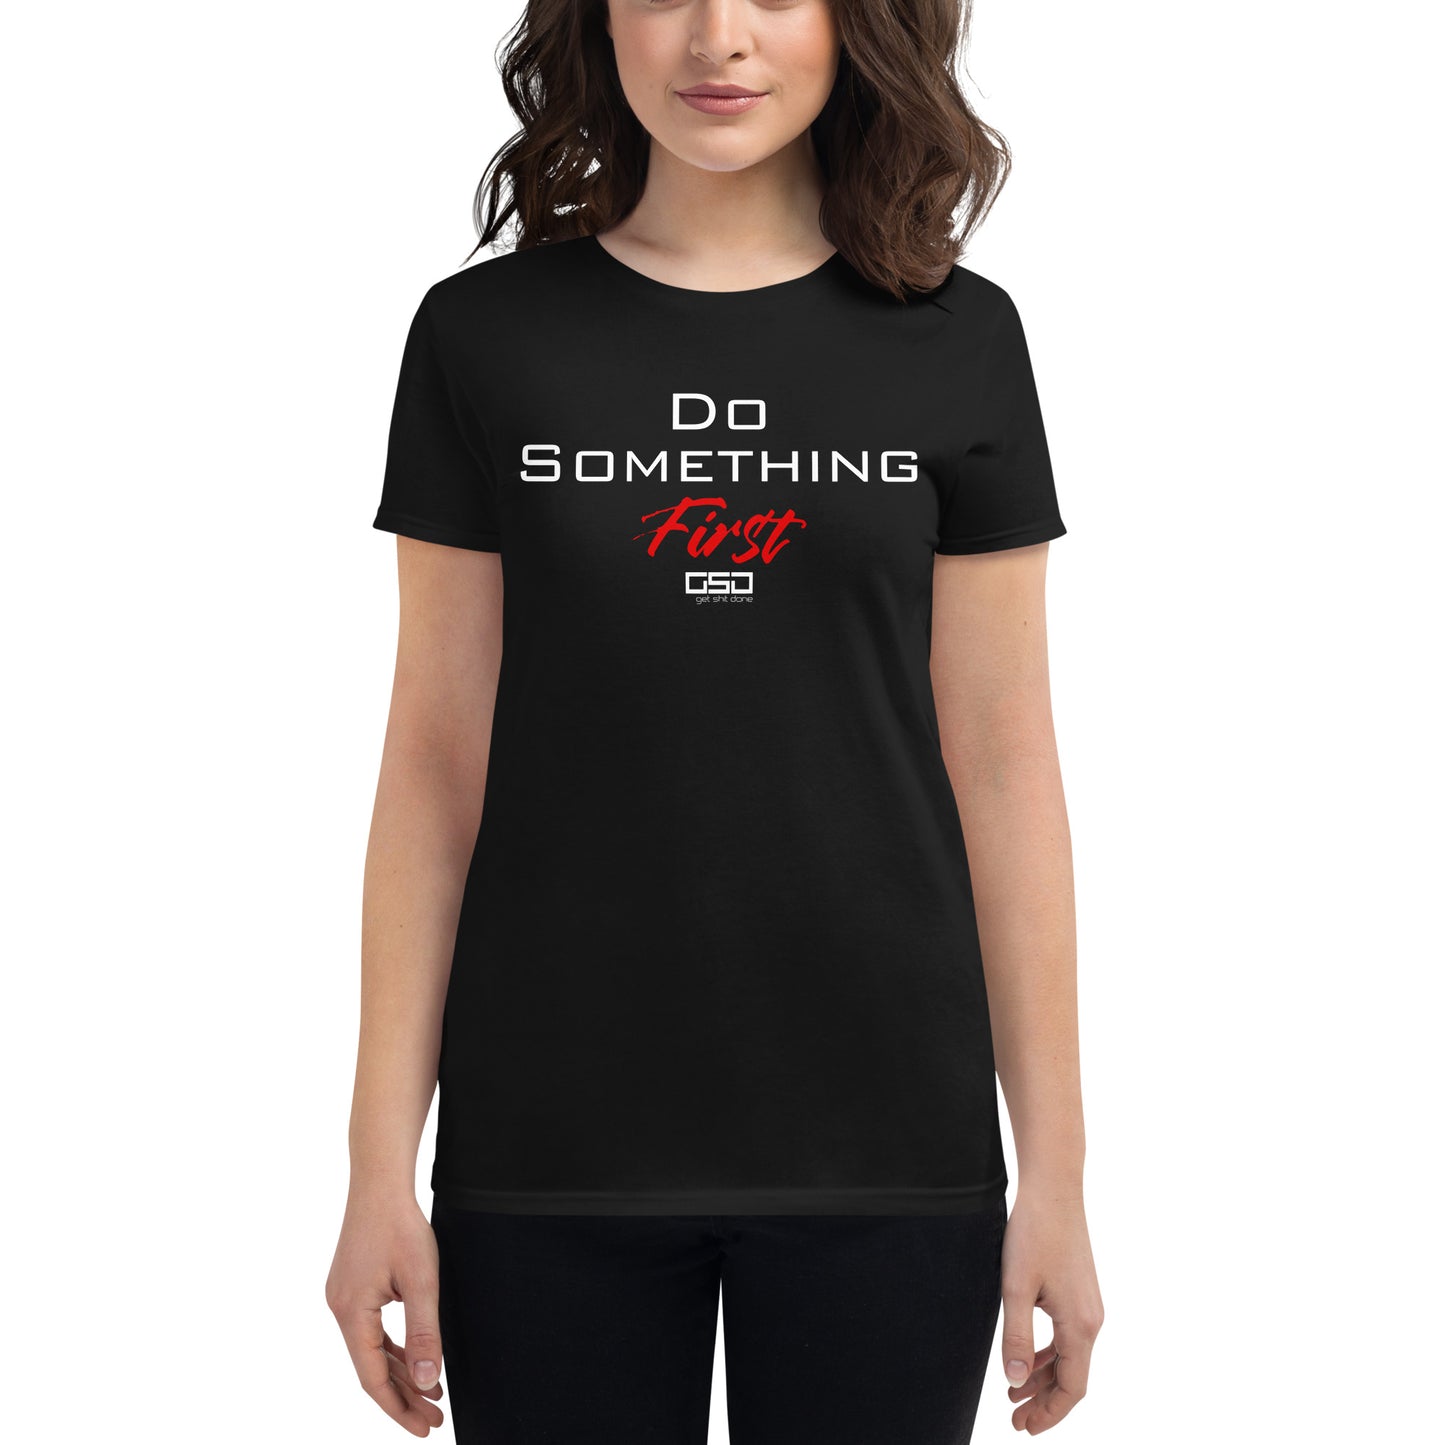 Do Something First-Women's short sleeve t-shirt